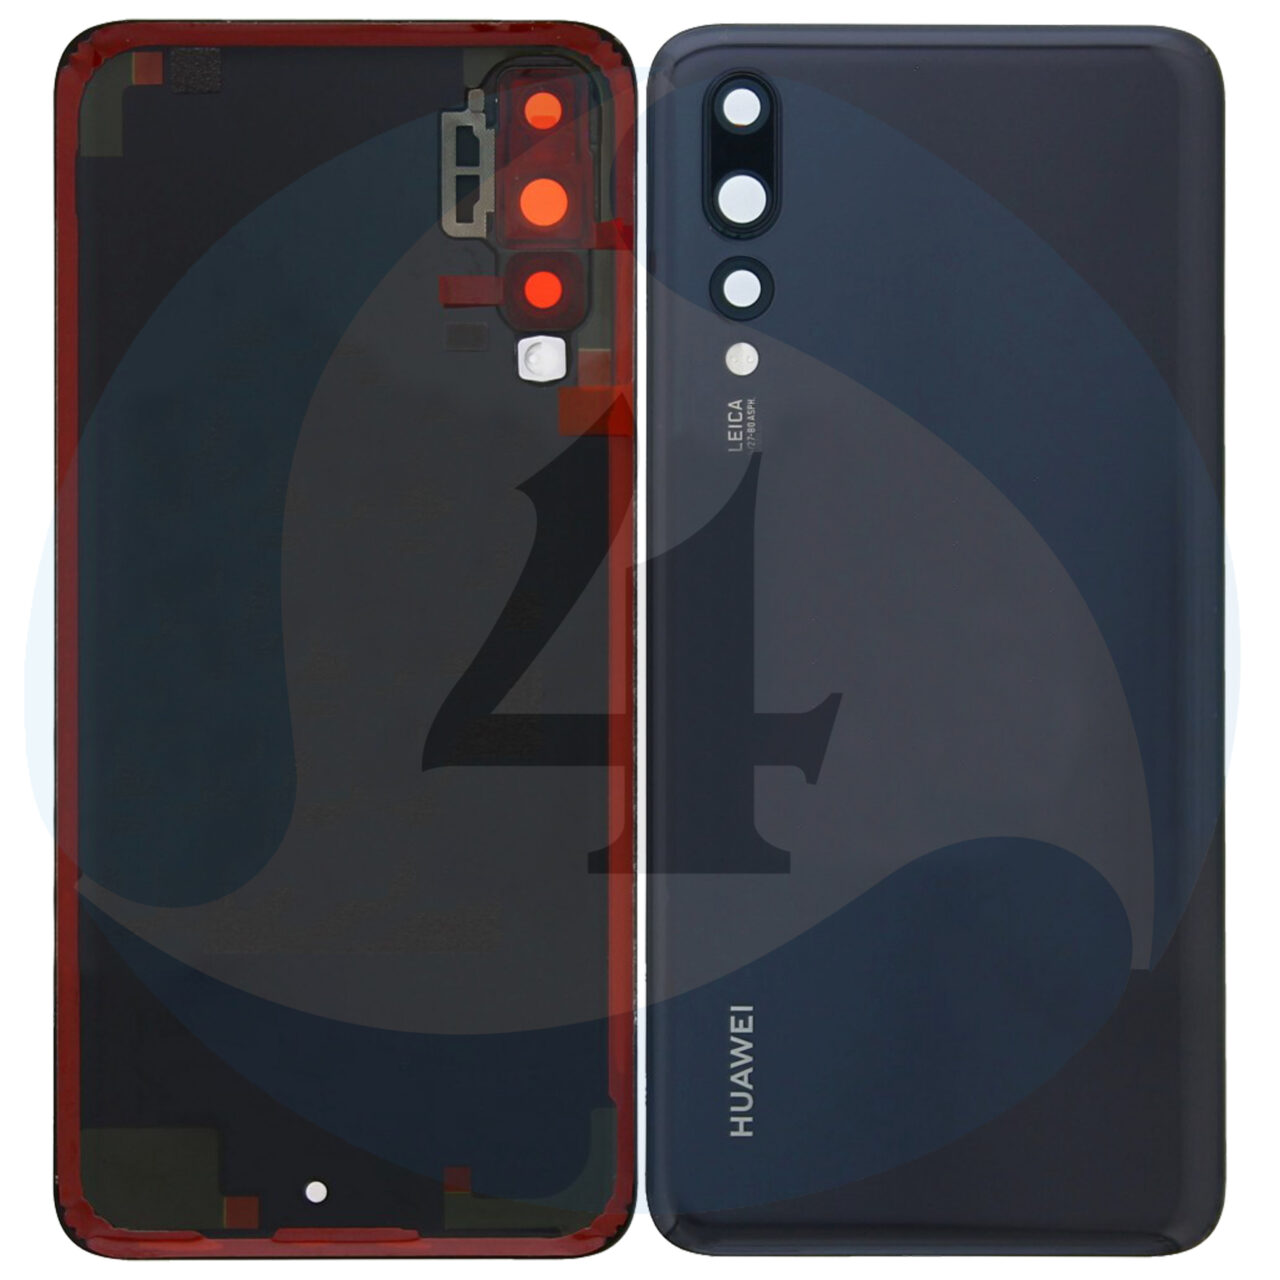 Huawei P20 Pro CLT L09 CLT L29 Battery Cover Midnight Black 1000x1000h